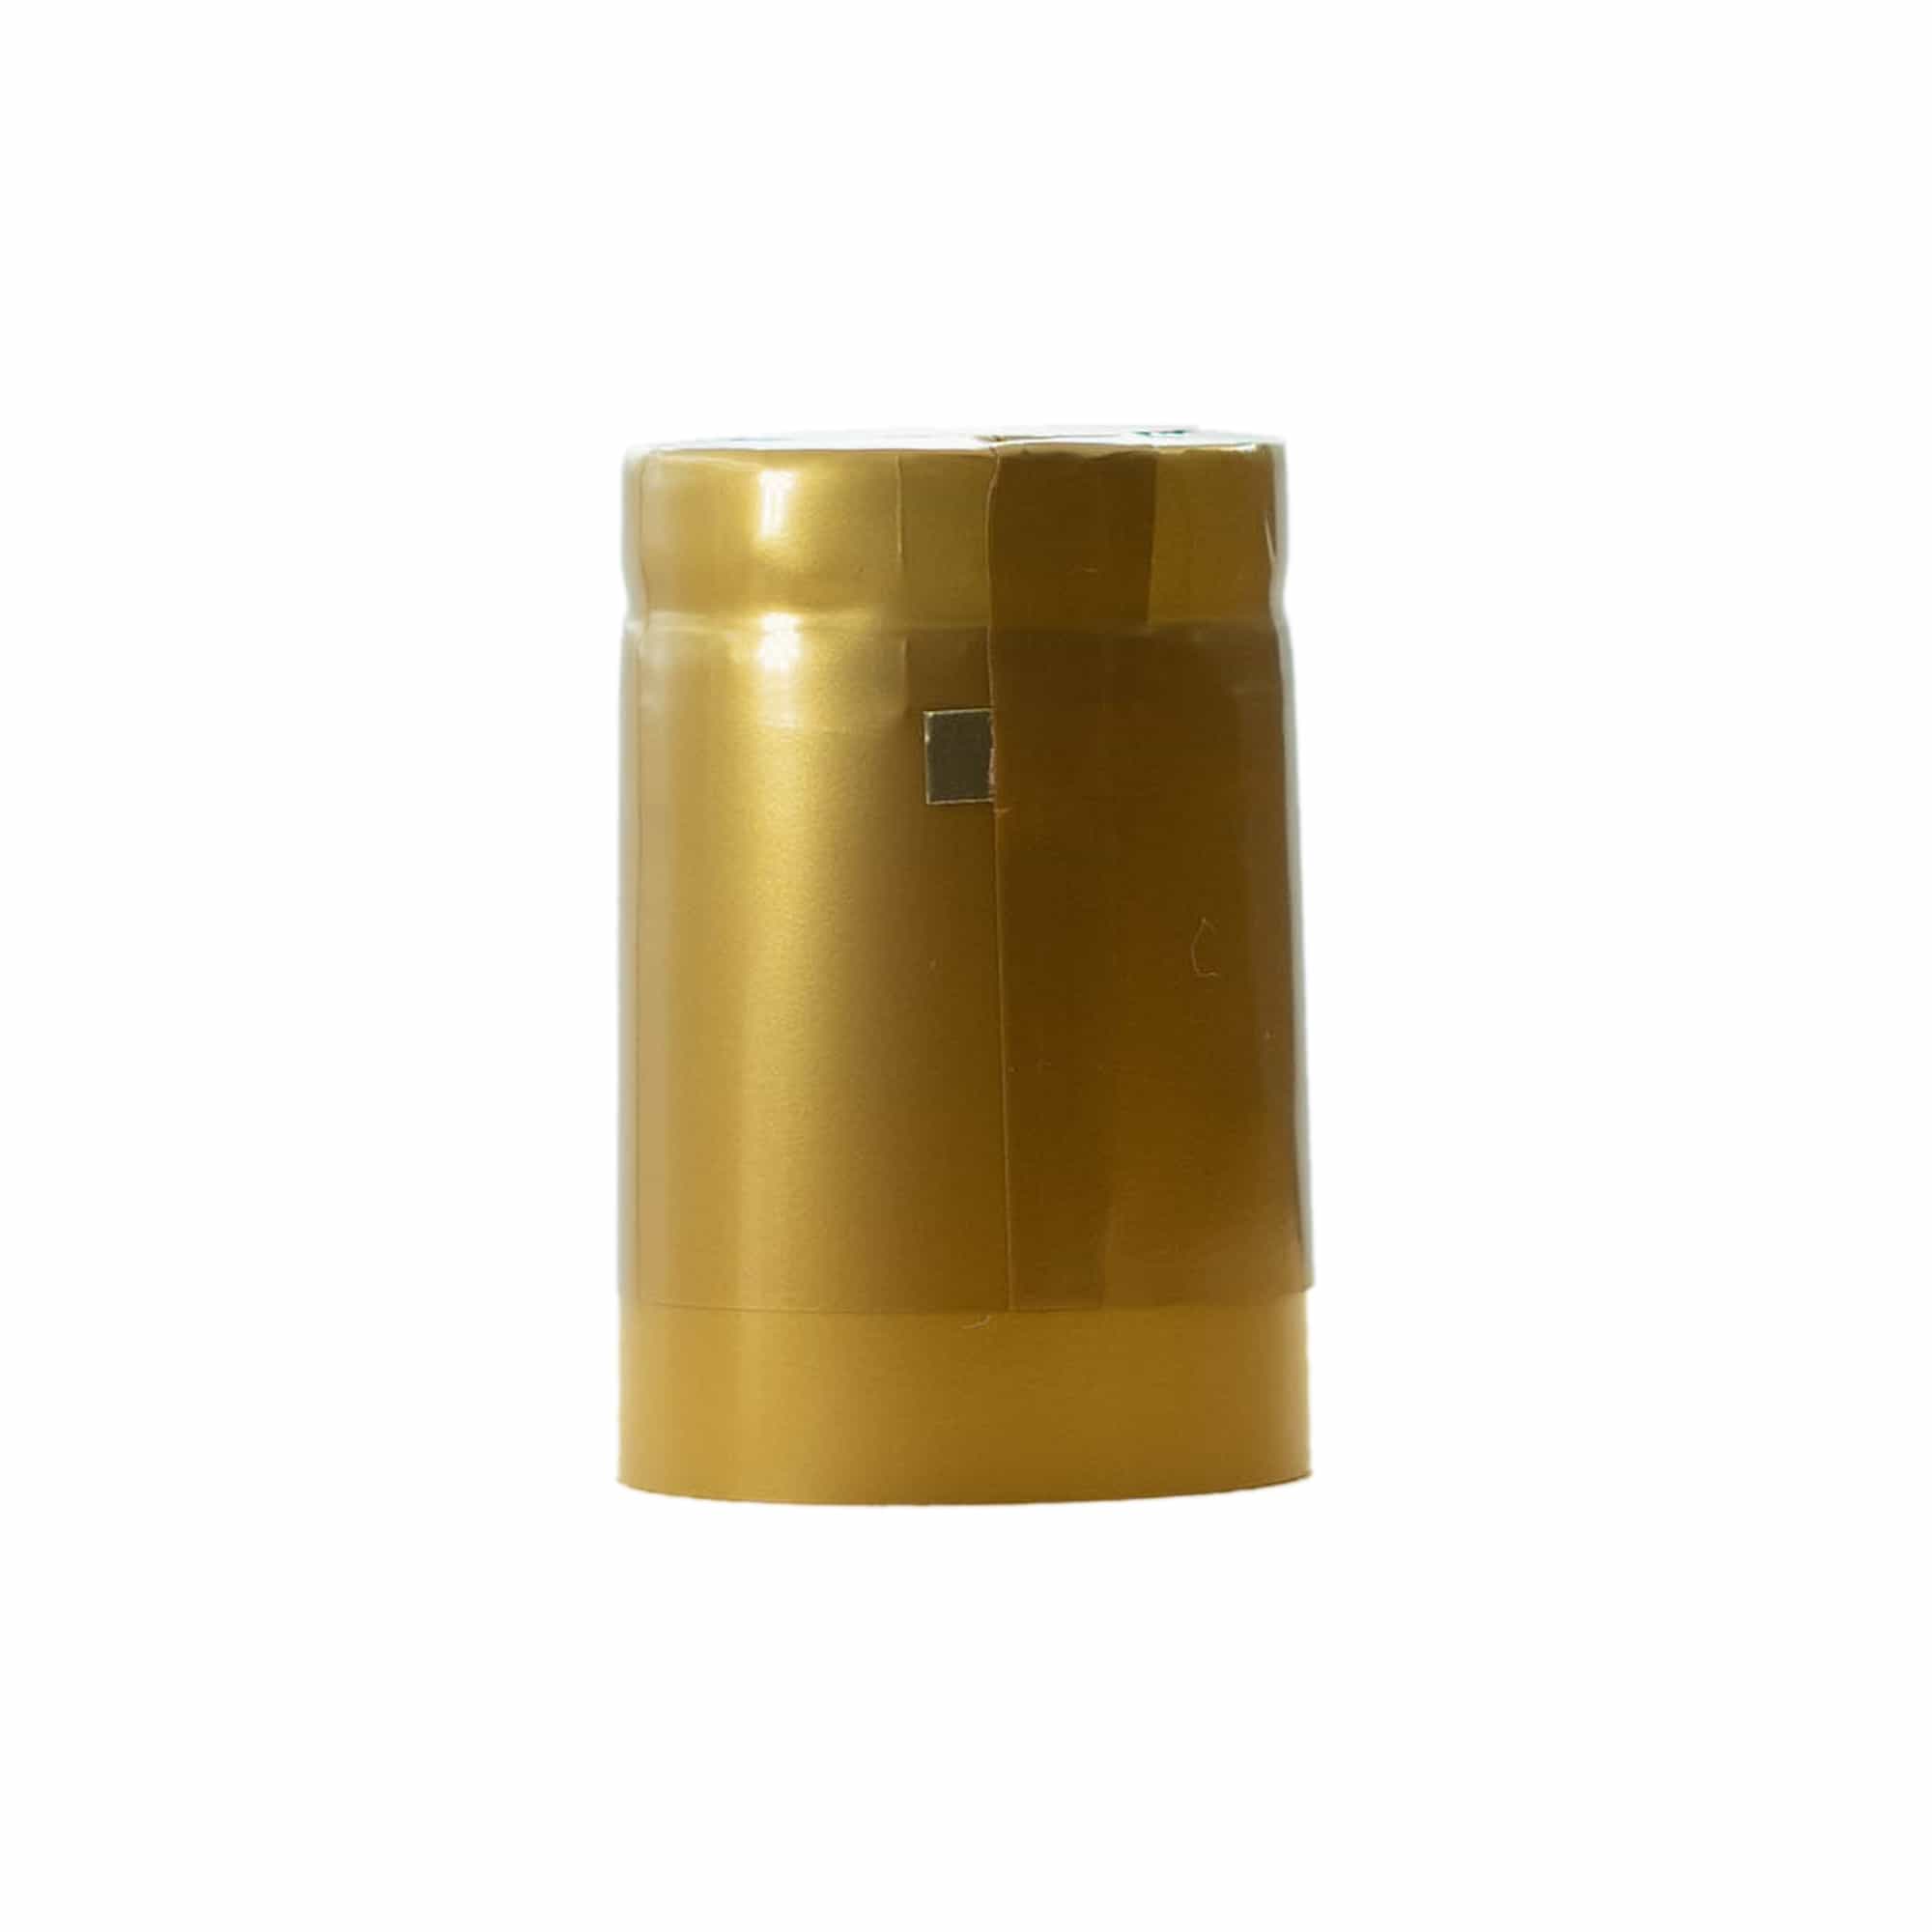 Schrumpfkapsel 32x41, PVC-Kunststoff, gold